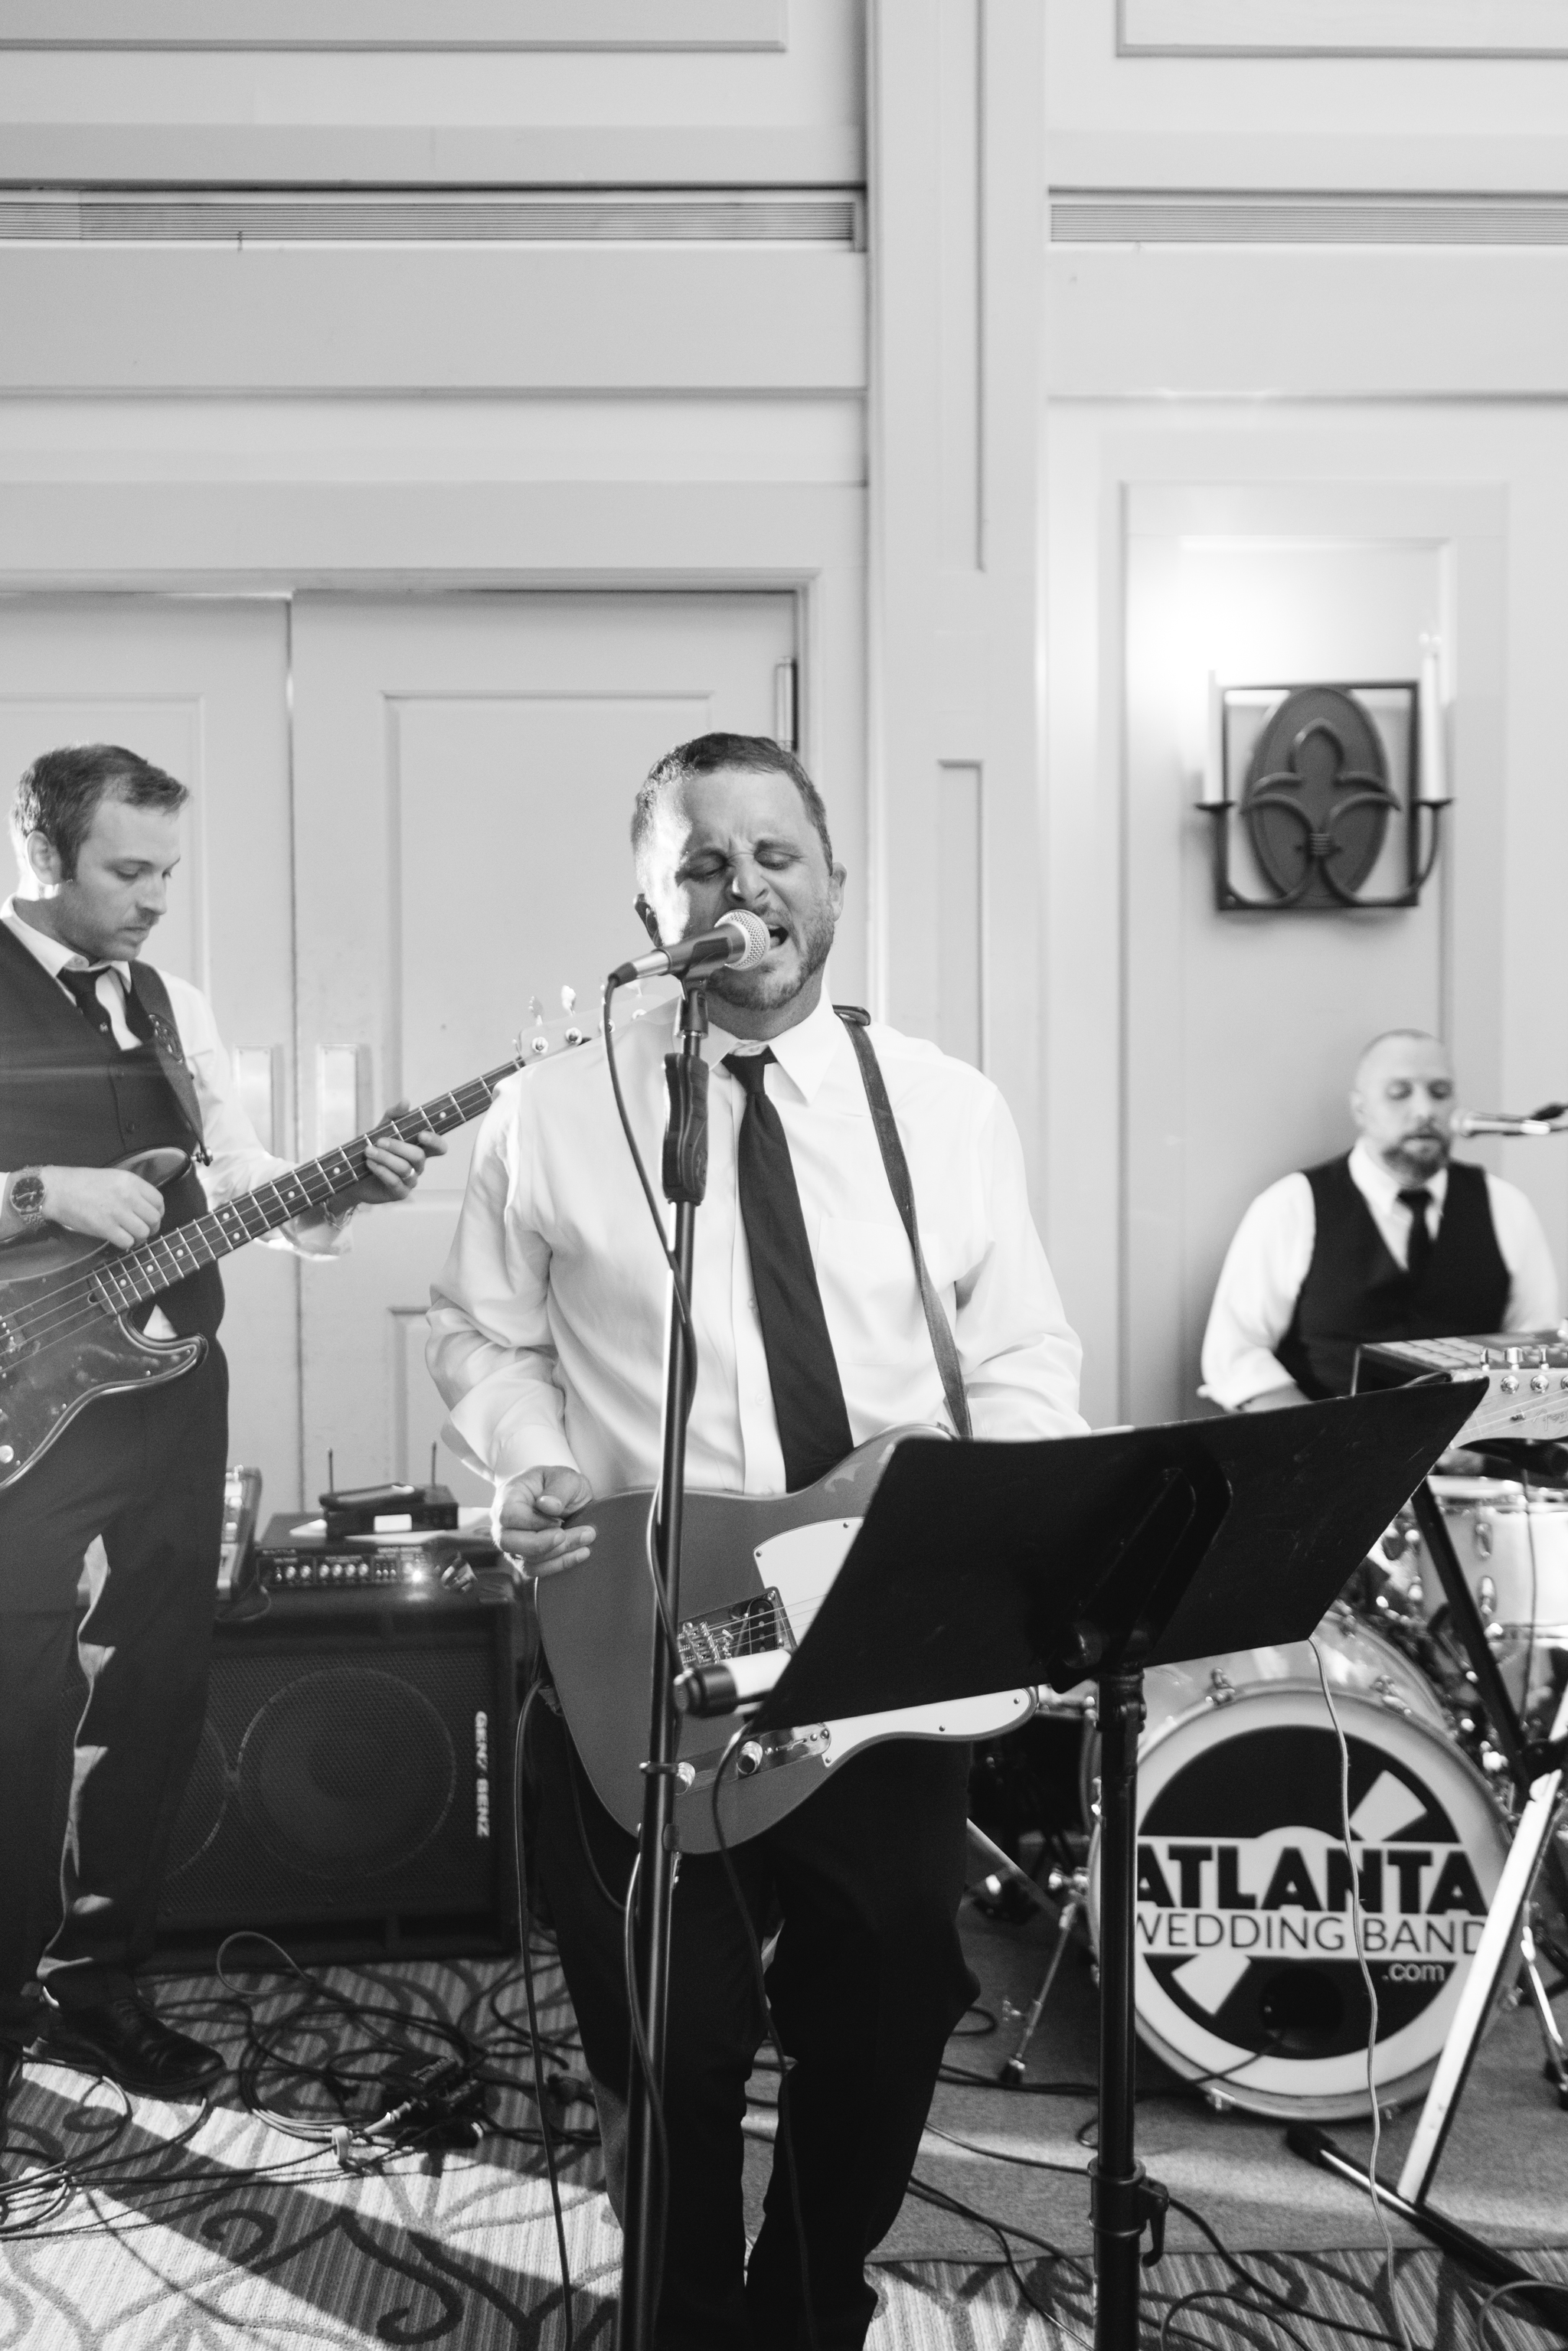 Atlanta Wedding Band